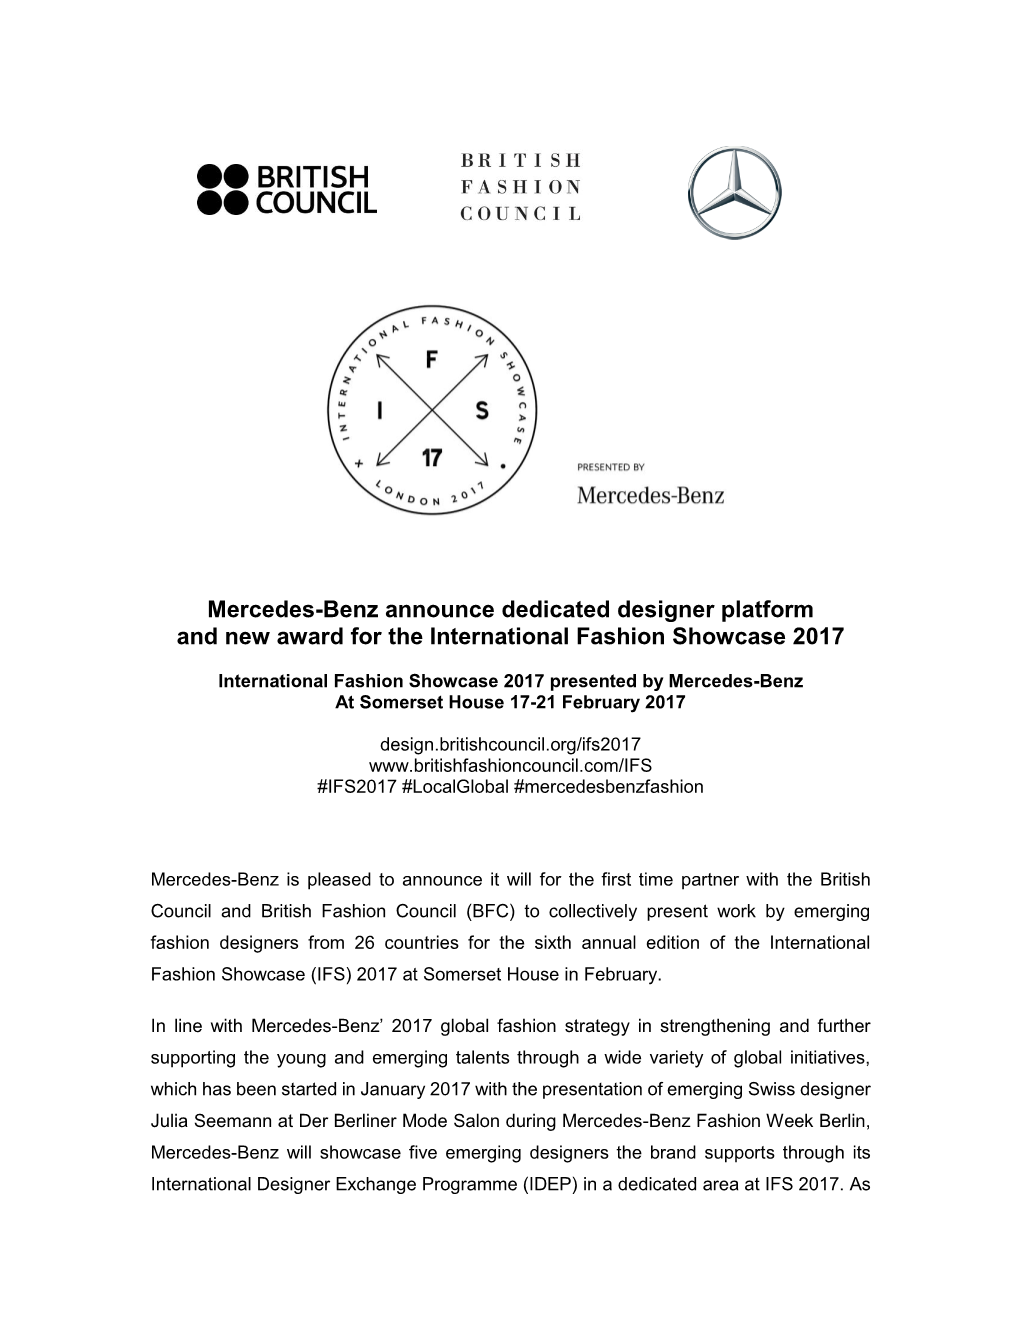 Mercedes-Benz Announce Dedicated Designer Platform and New Award for the International Fashion Showcase 2017